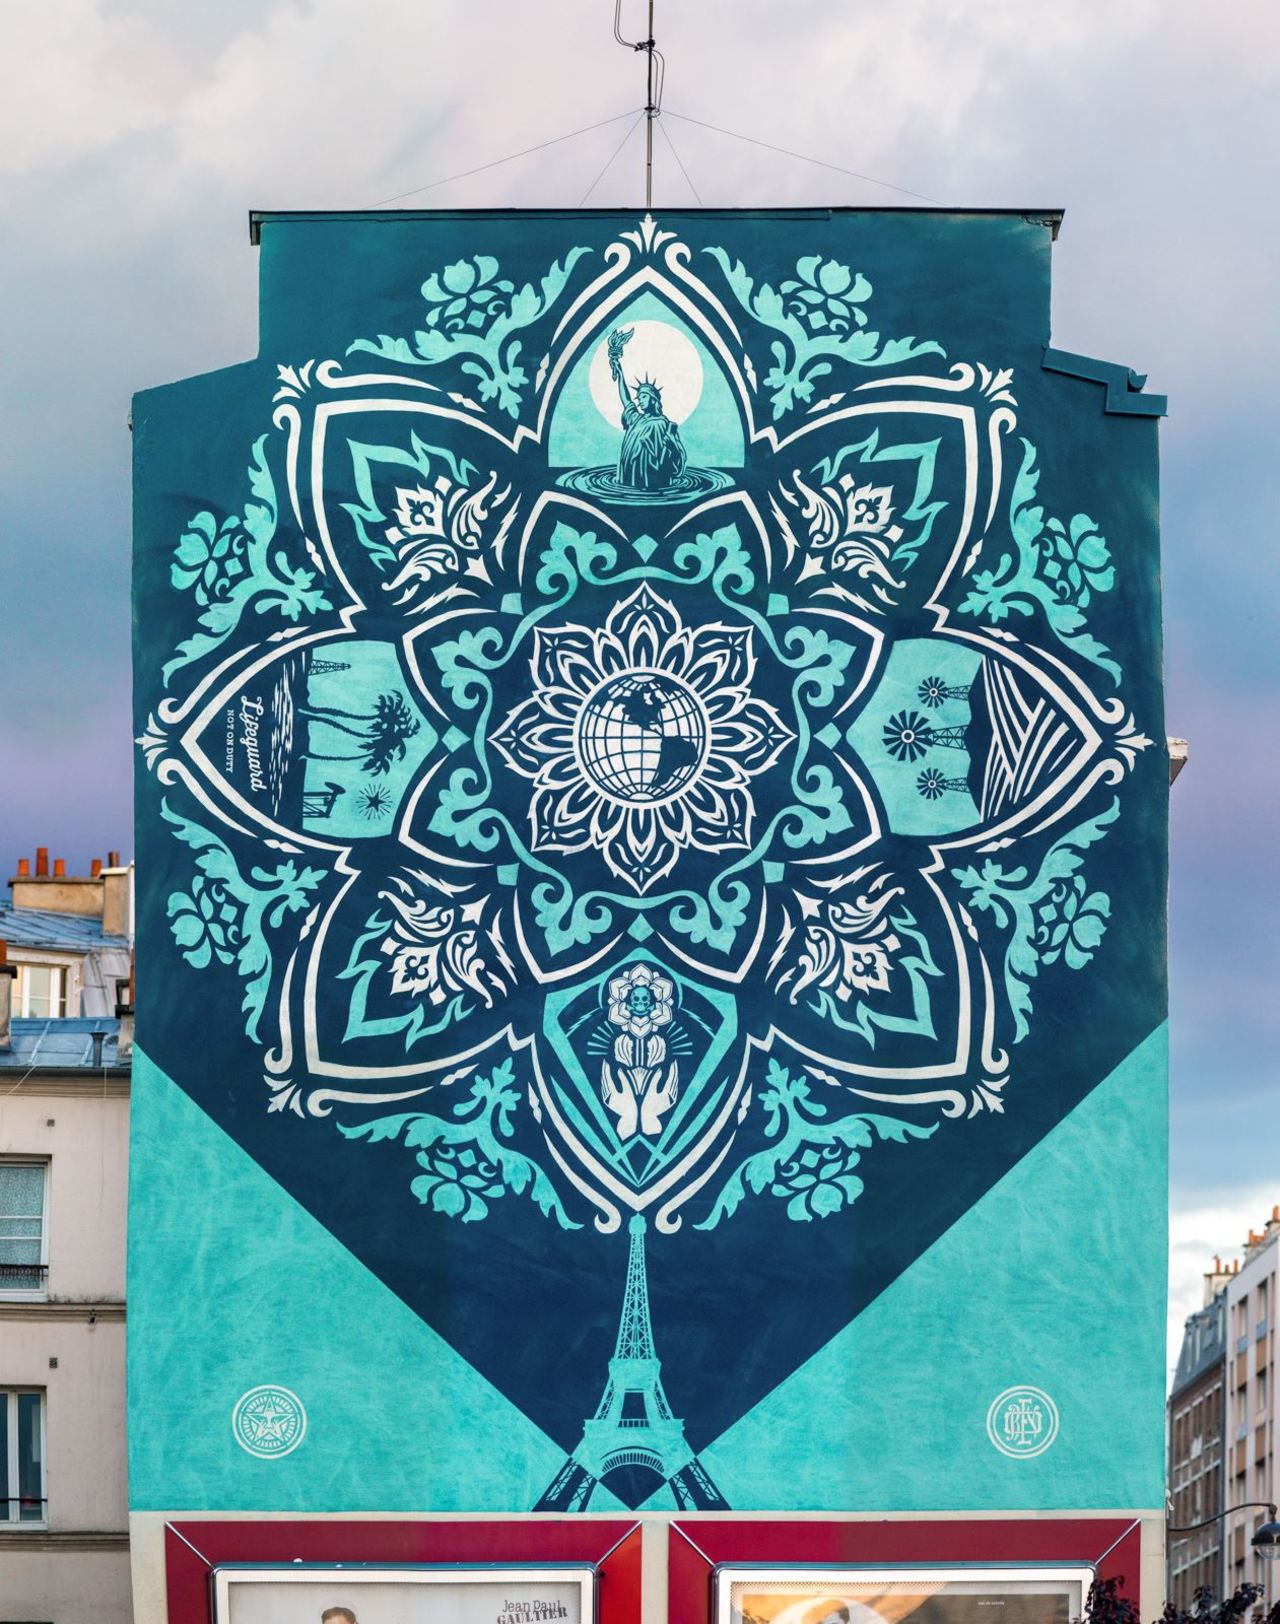 "Earth Crisis" by Shepard Fairey in Paris #streetart http://www.streetartnews.net/2016/06/earth-crisis-by-shepard-fairey-in-paris.html https://t.co/g3CG0mZD9d